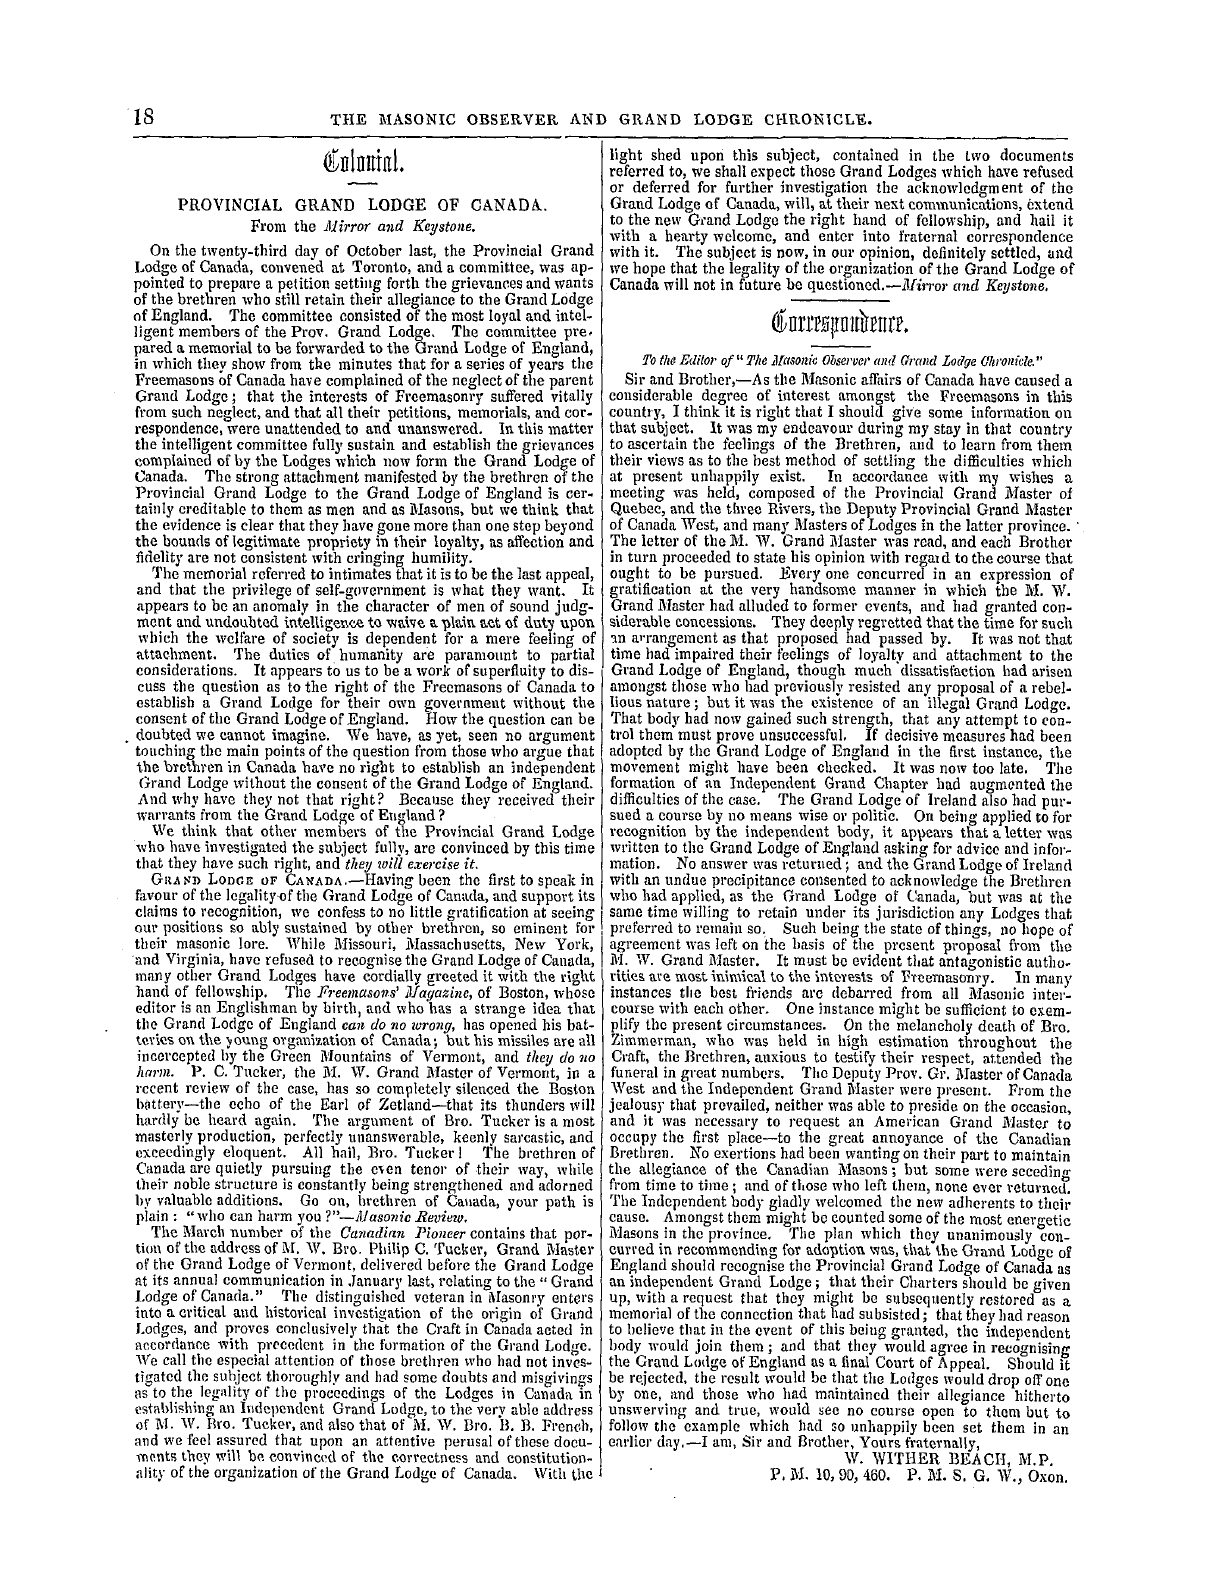 The Masonic Observer: 1857-06-20 - Correspondence.